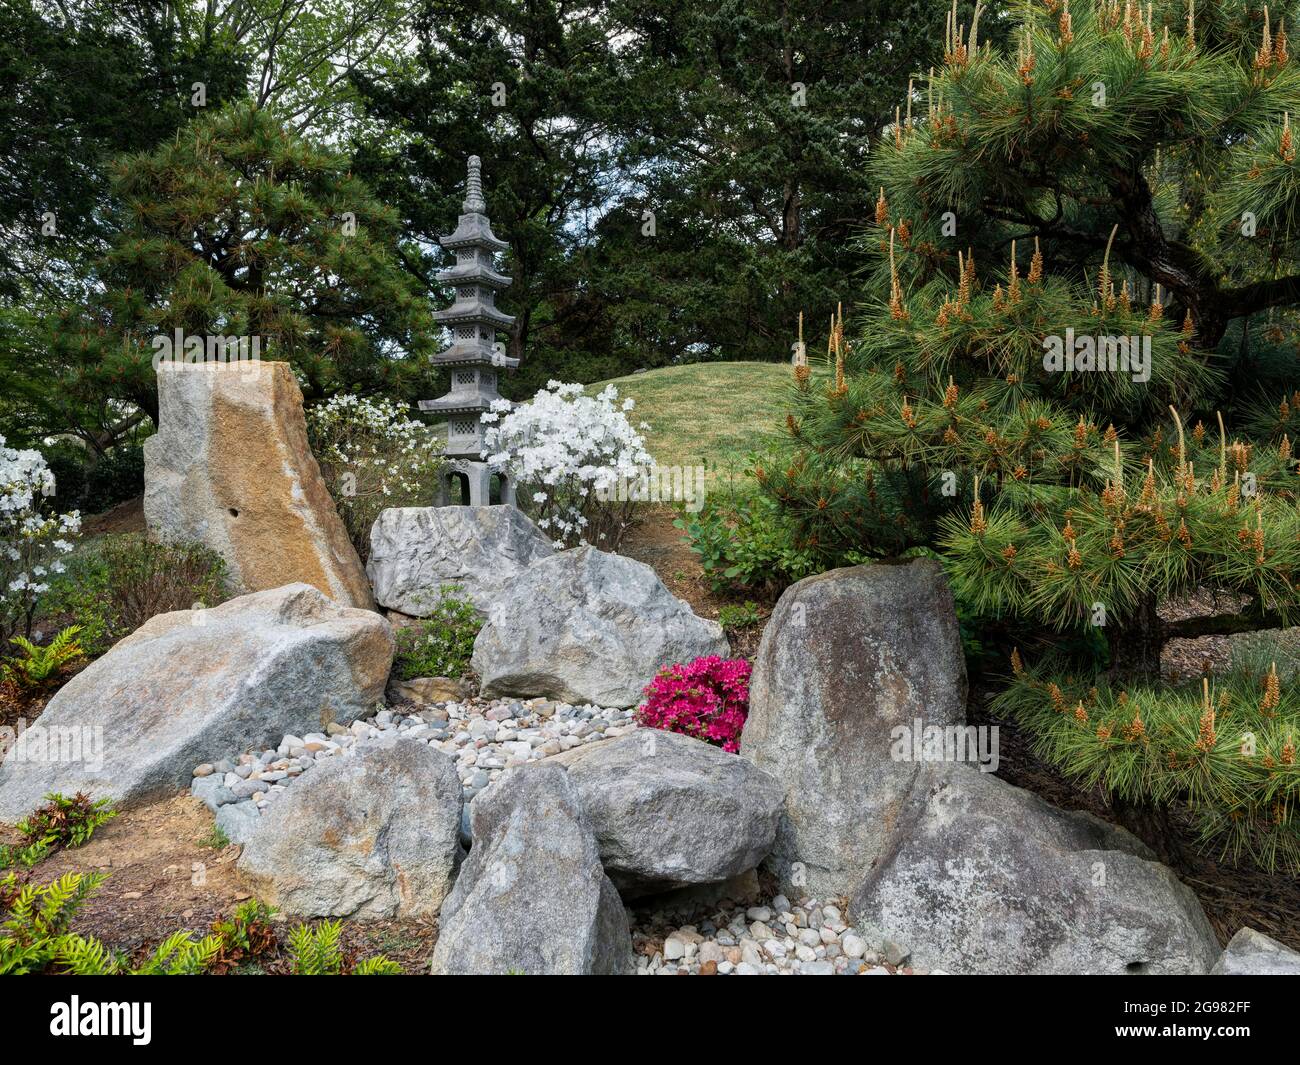 Japanese Garden at Cheekwood Estate and Gardens, Nashville, Tennessee, USA Stock Photo